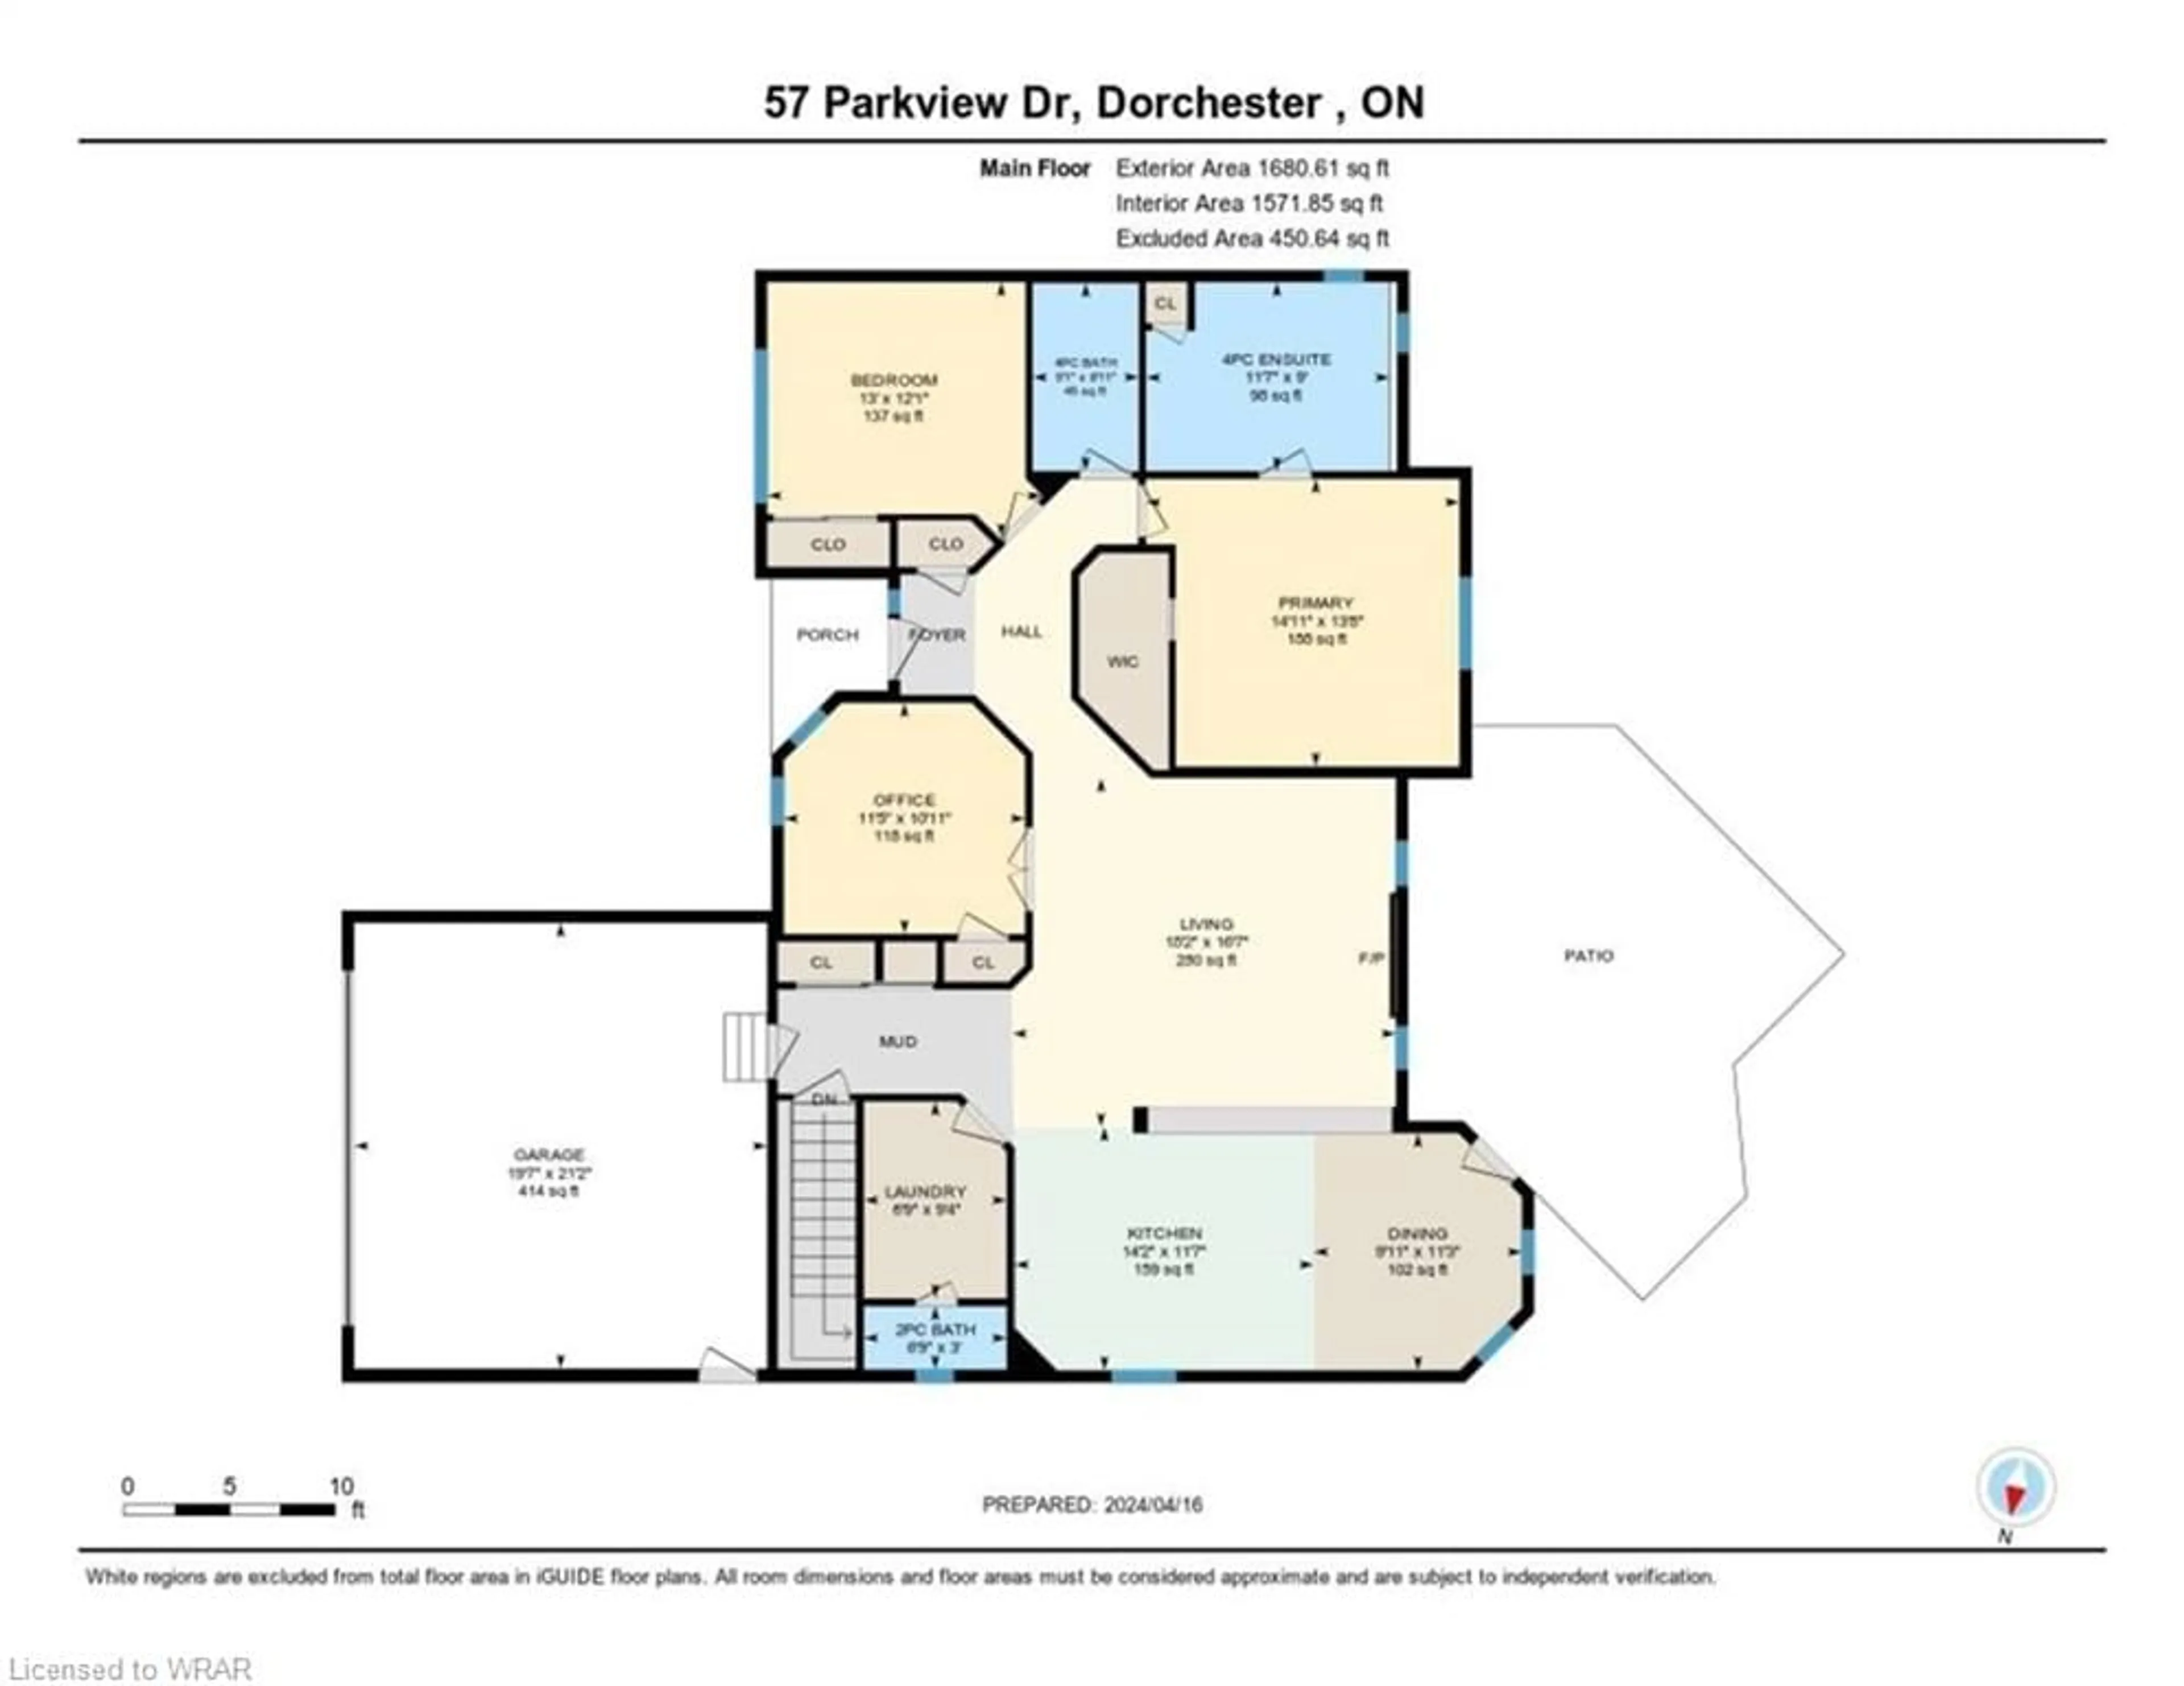 Floor plan for 57 Parkview Dr, Dorchester Ontario N0L 1G2